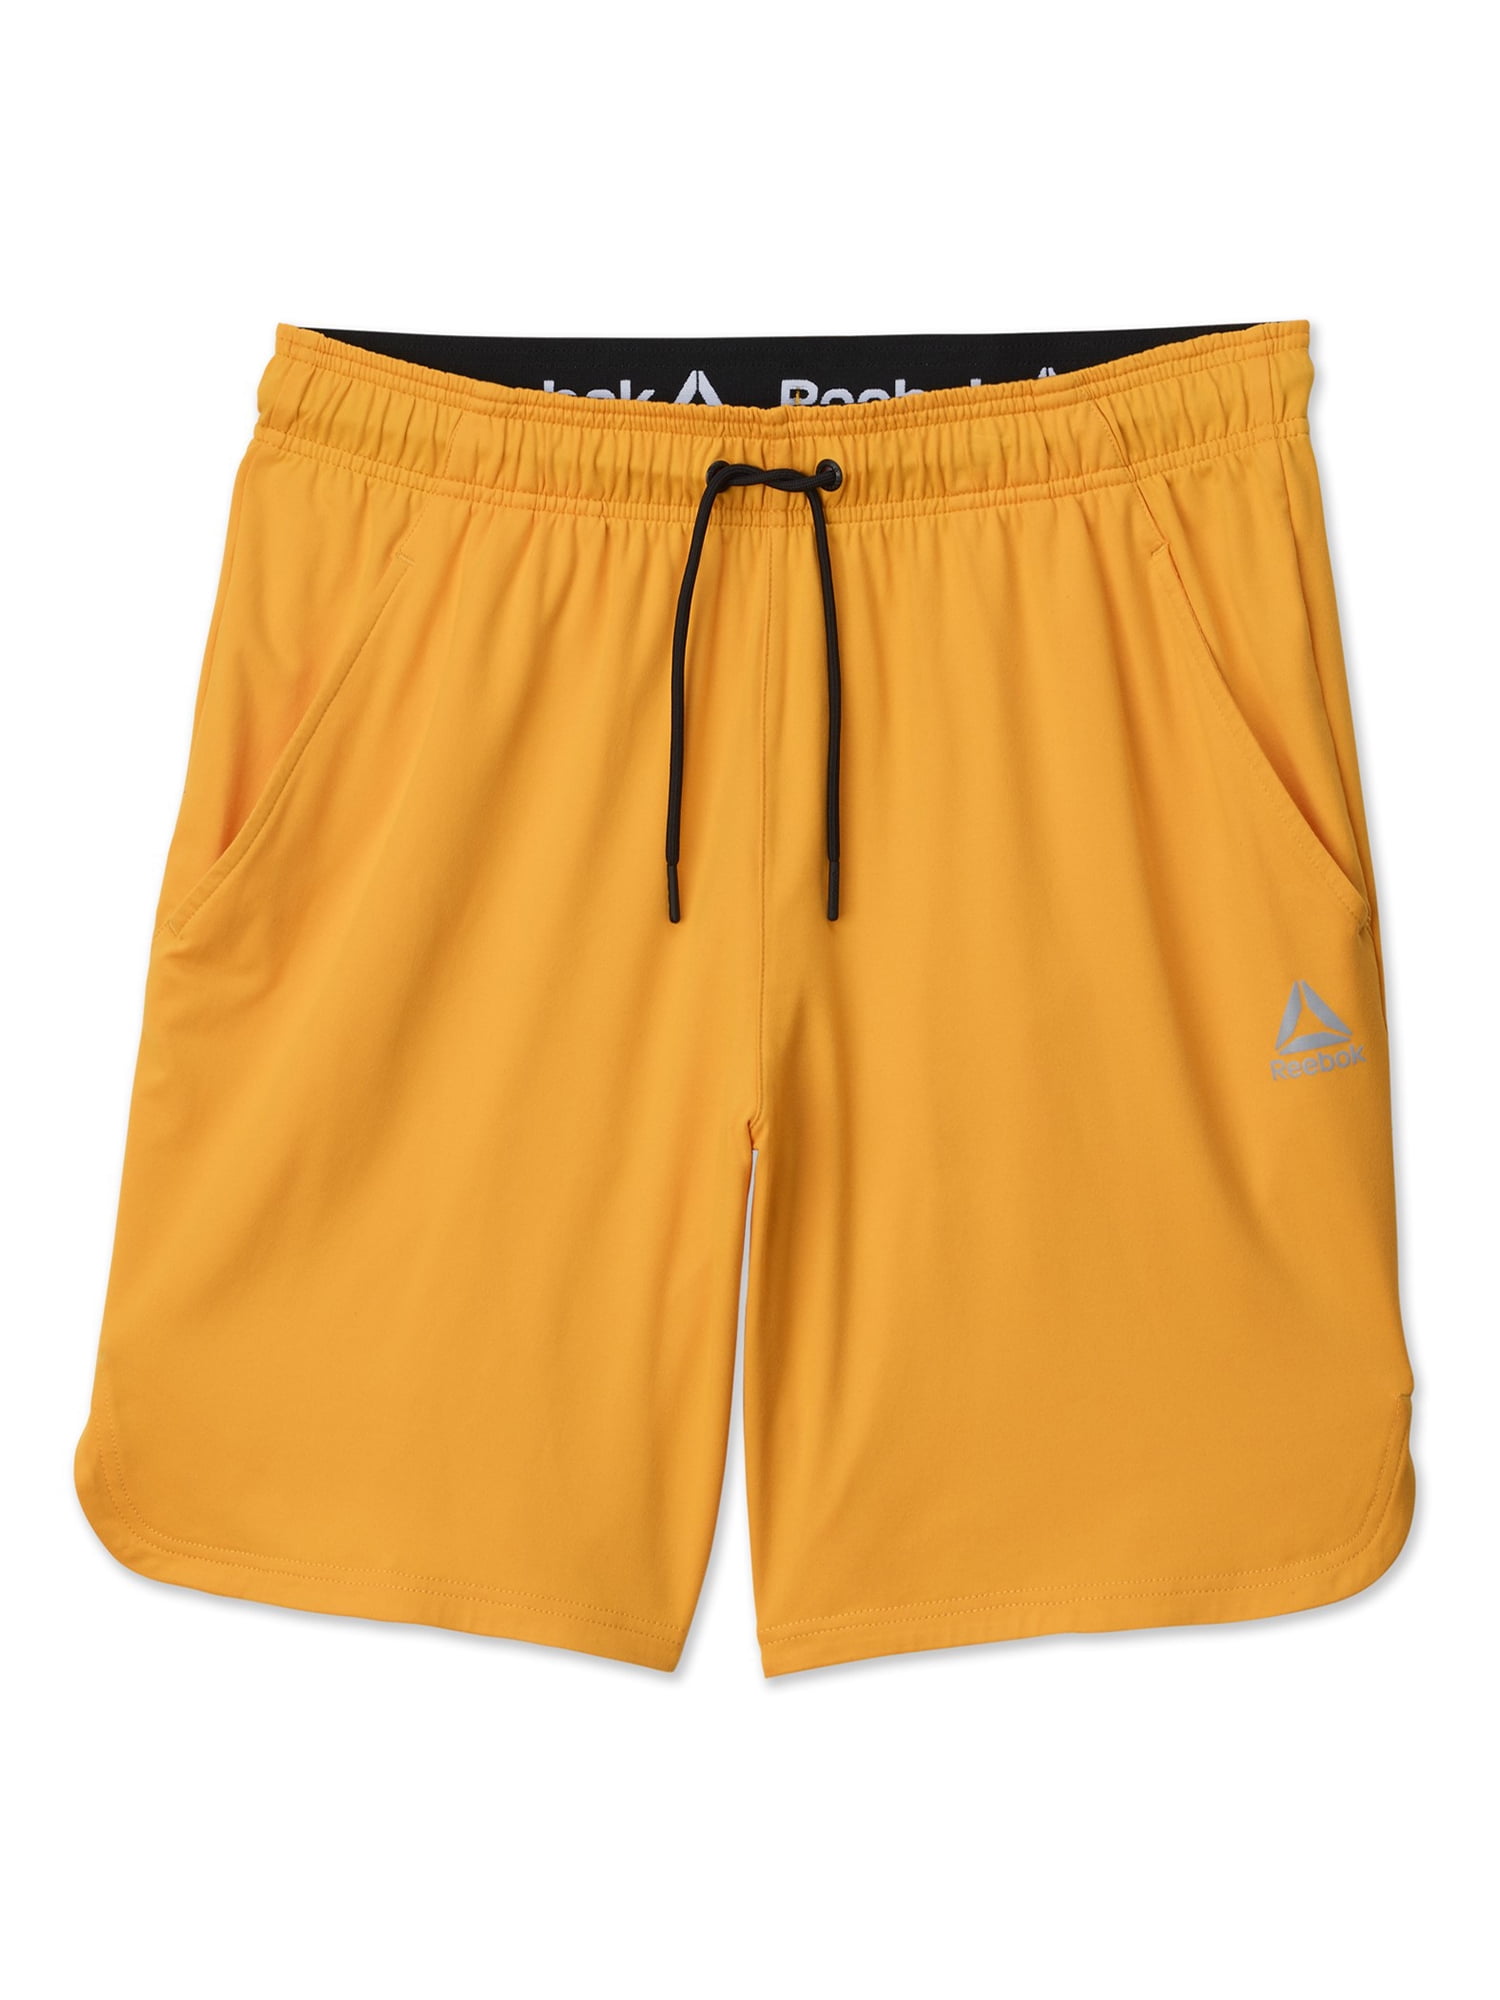 Reebok Men's and Big Men's Delta Core 9 Shorts, up to Size 3XL 